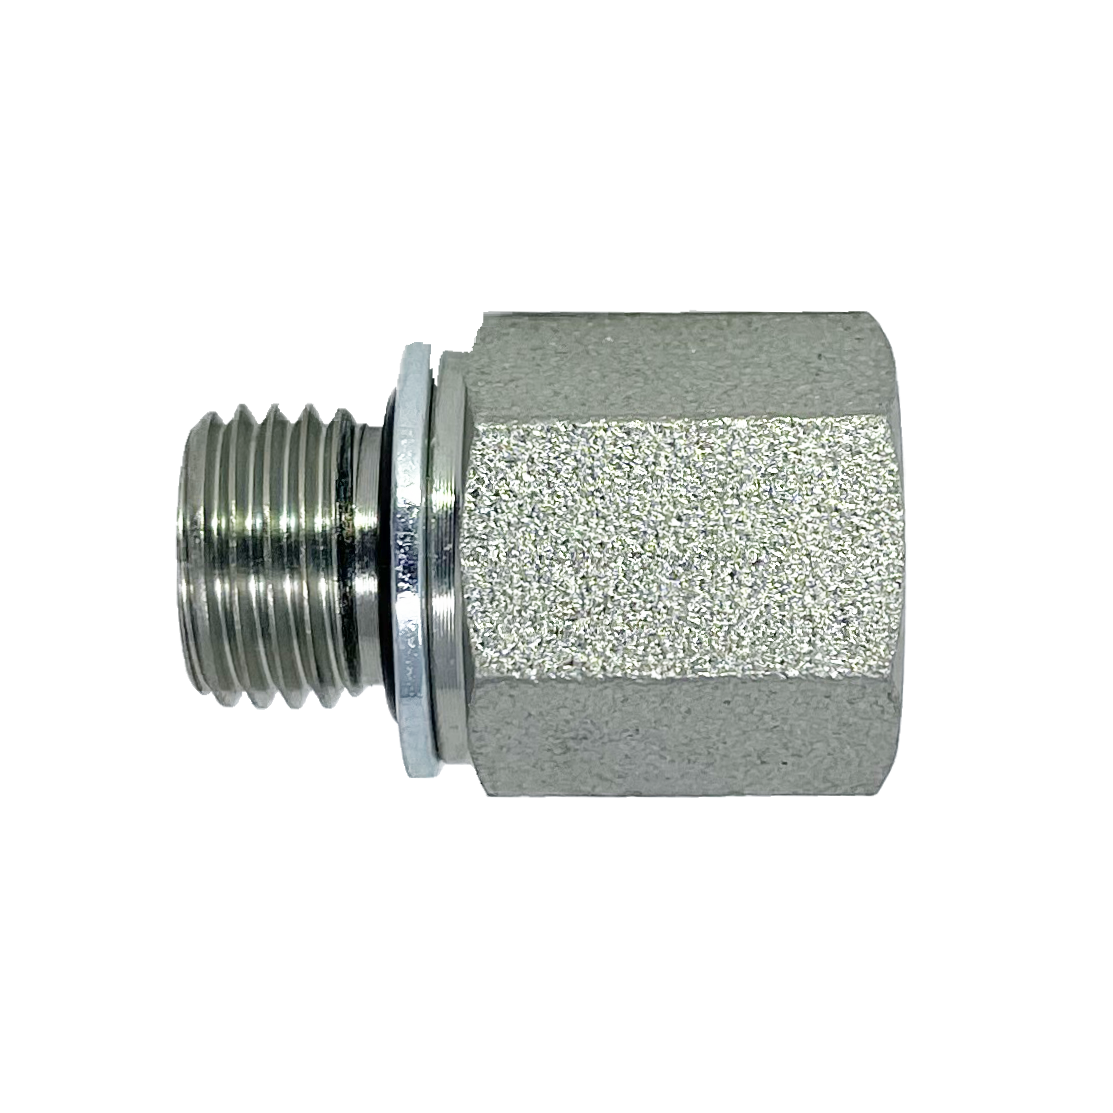 9635S-18-L12-06 : Adaptall Straight Adapter, Male L12 DIN Tube x Female 0.375 (3/8") NPT, Carbon Steel